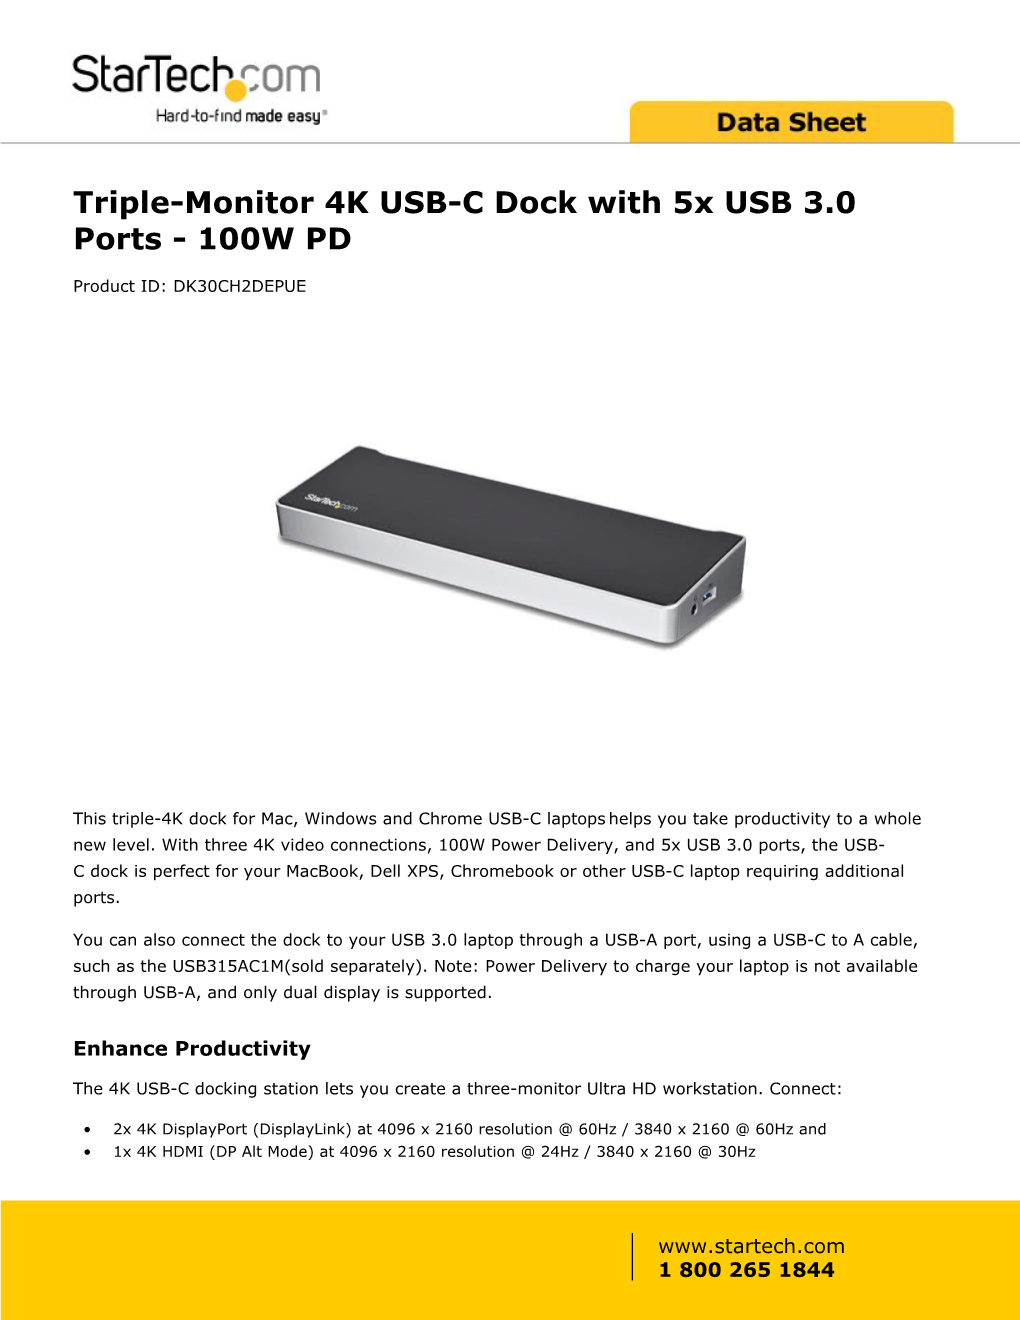 Triple-Monitor 4K USB-C Dock with 5X USB 3.0 Ports - 100W PD